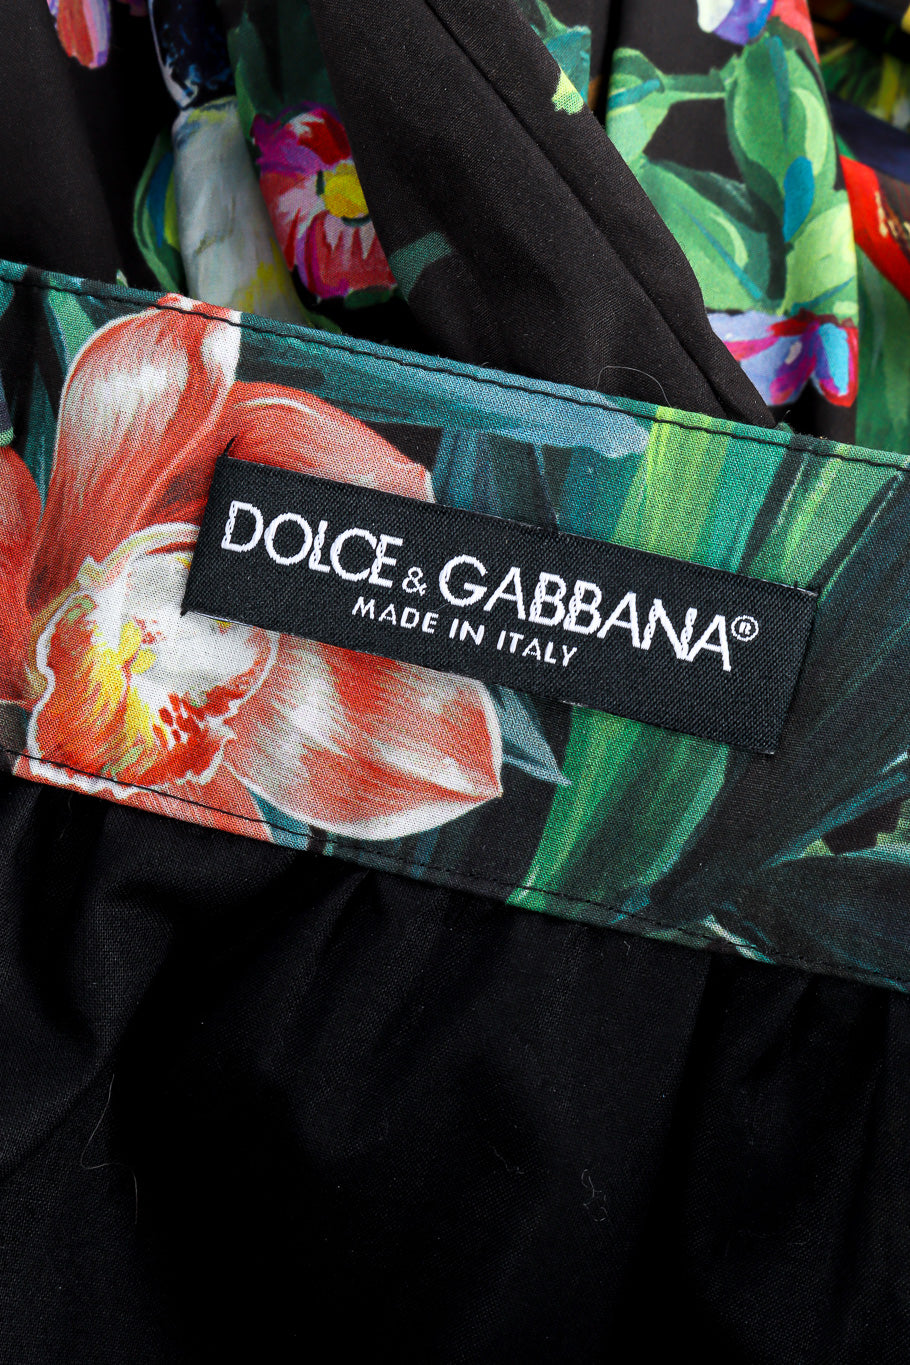 Dolce & Gabbana tiered jungle skirt fabric designer label @recessla